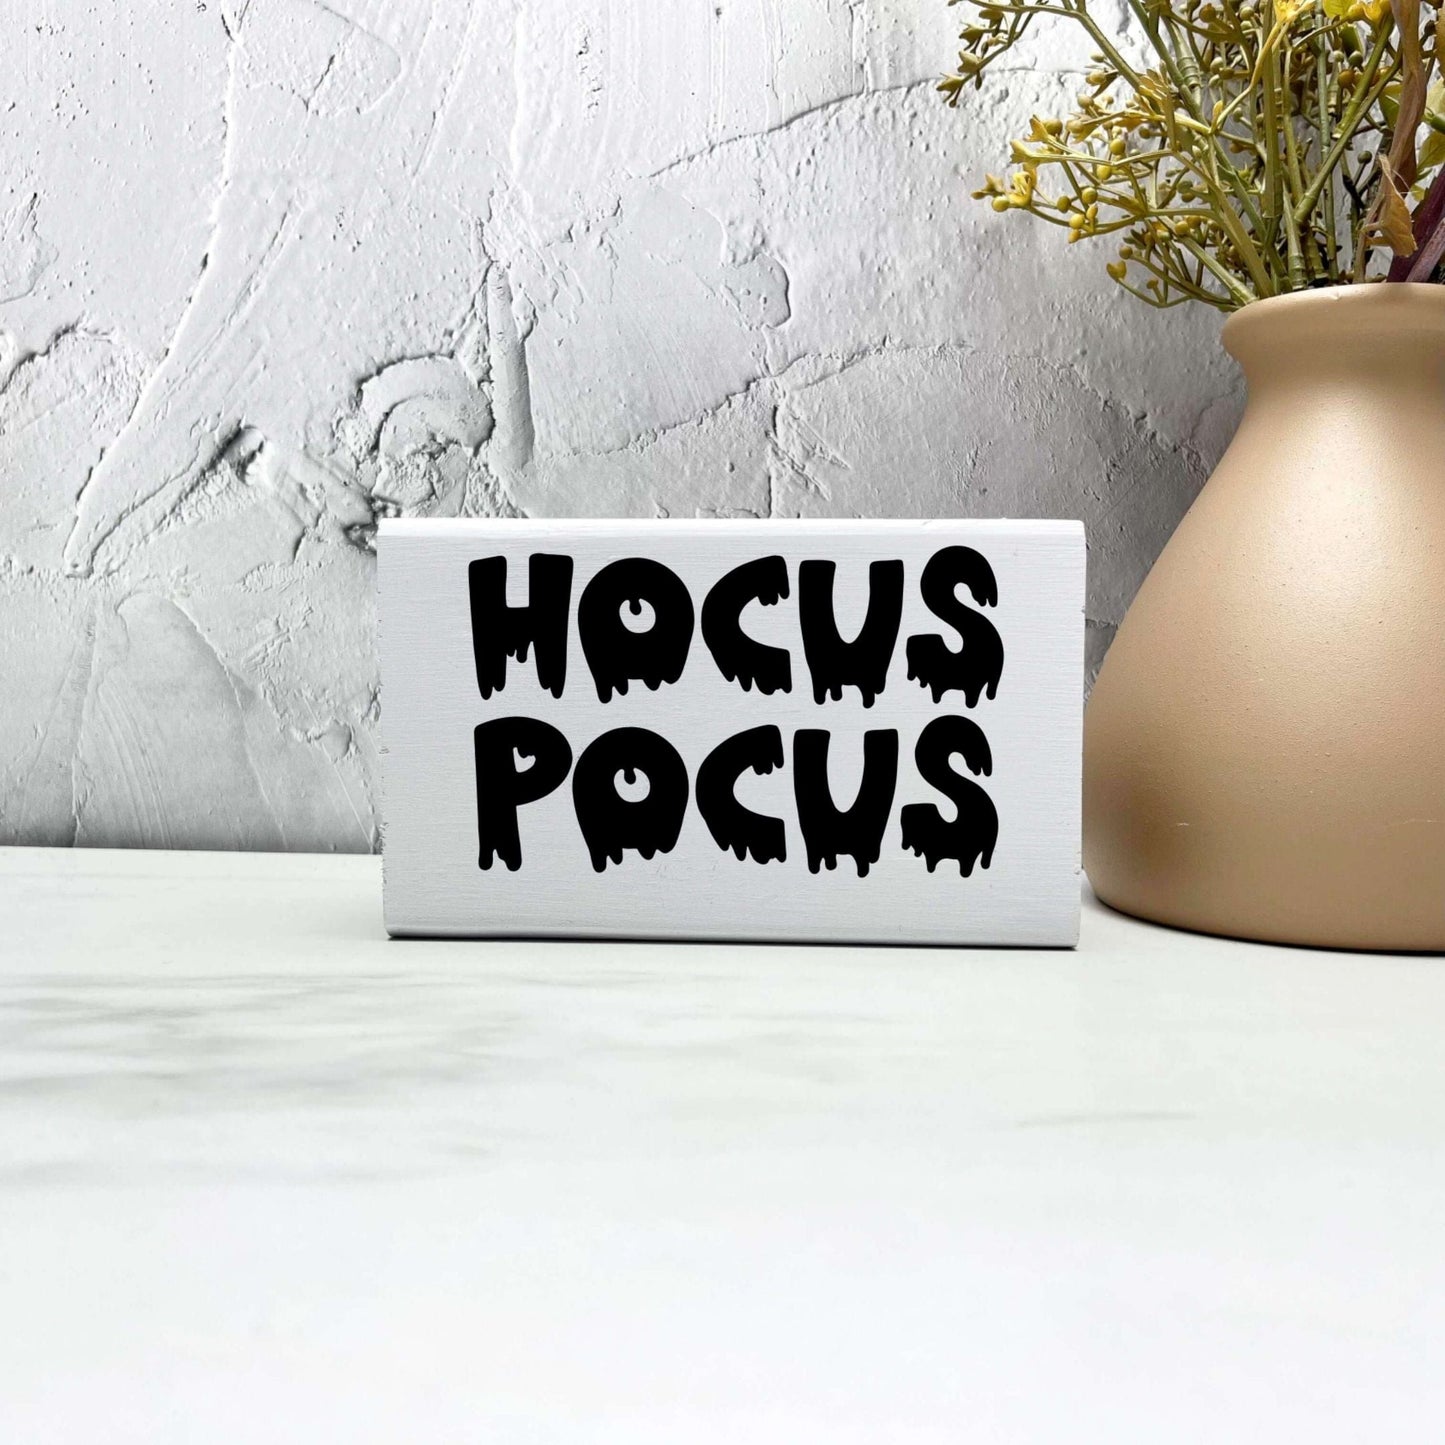 Hocus pocus Sign, Halloween Wood Sign, Halloween Home Decor, Spooky Decor